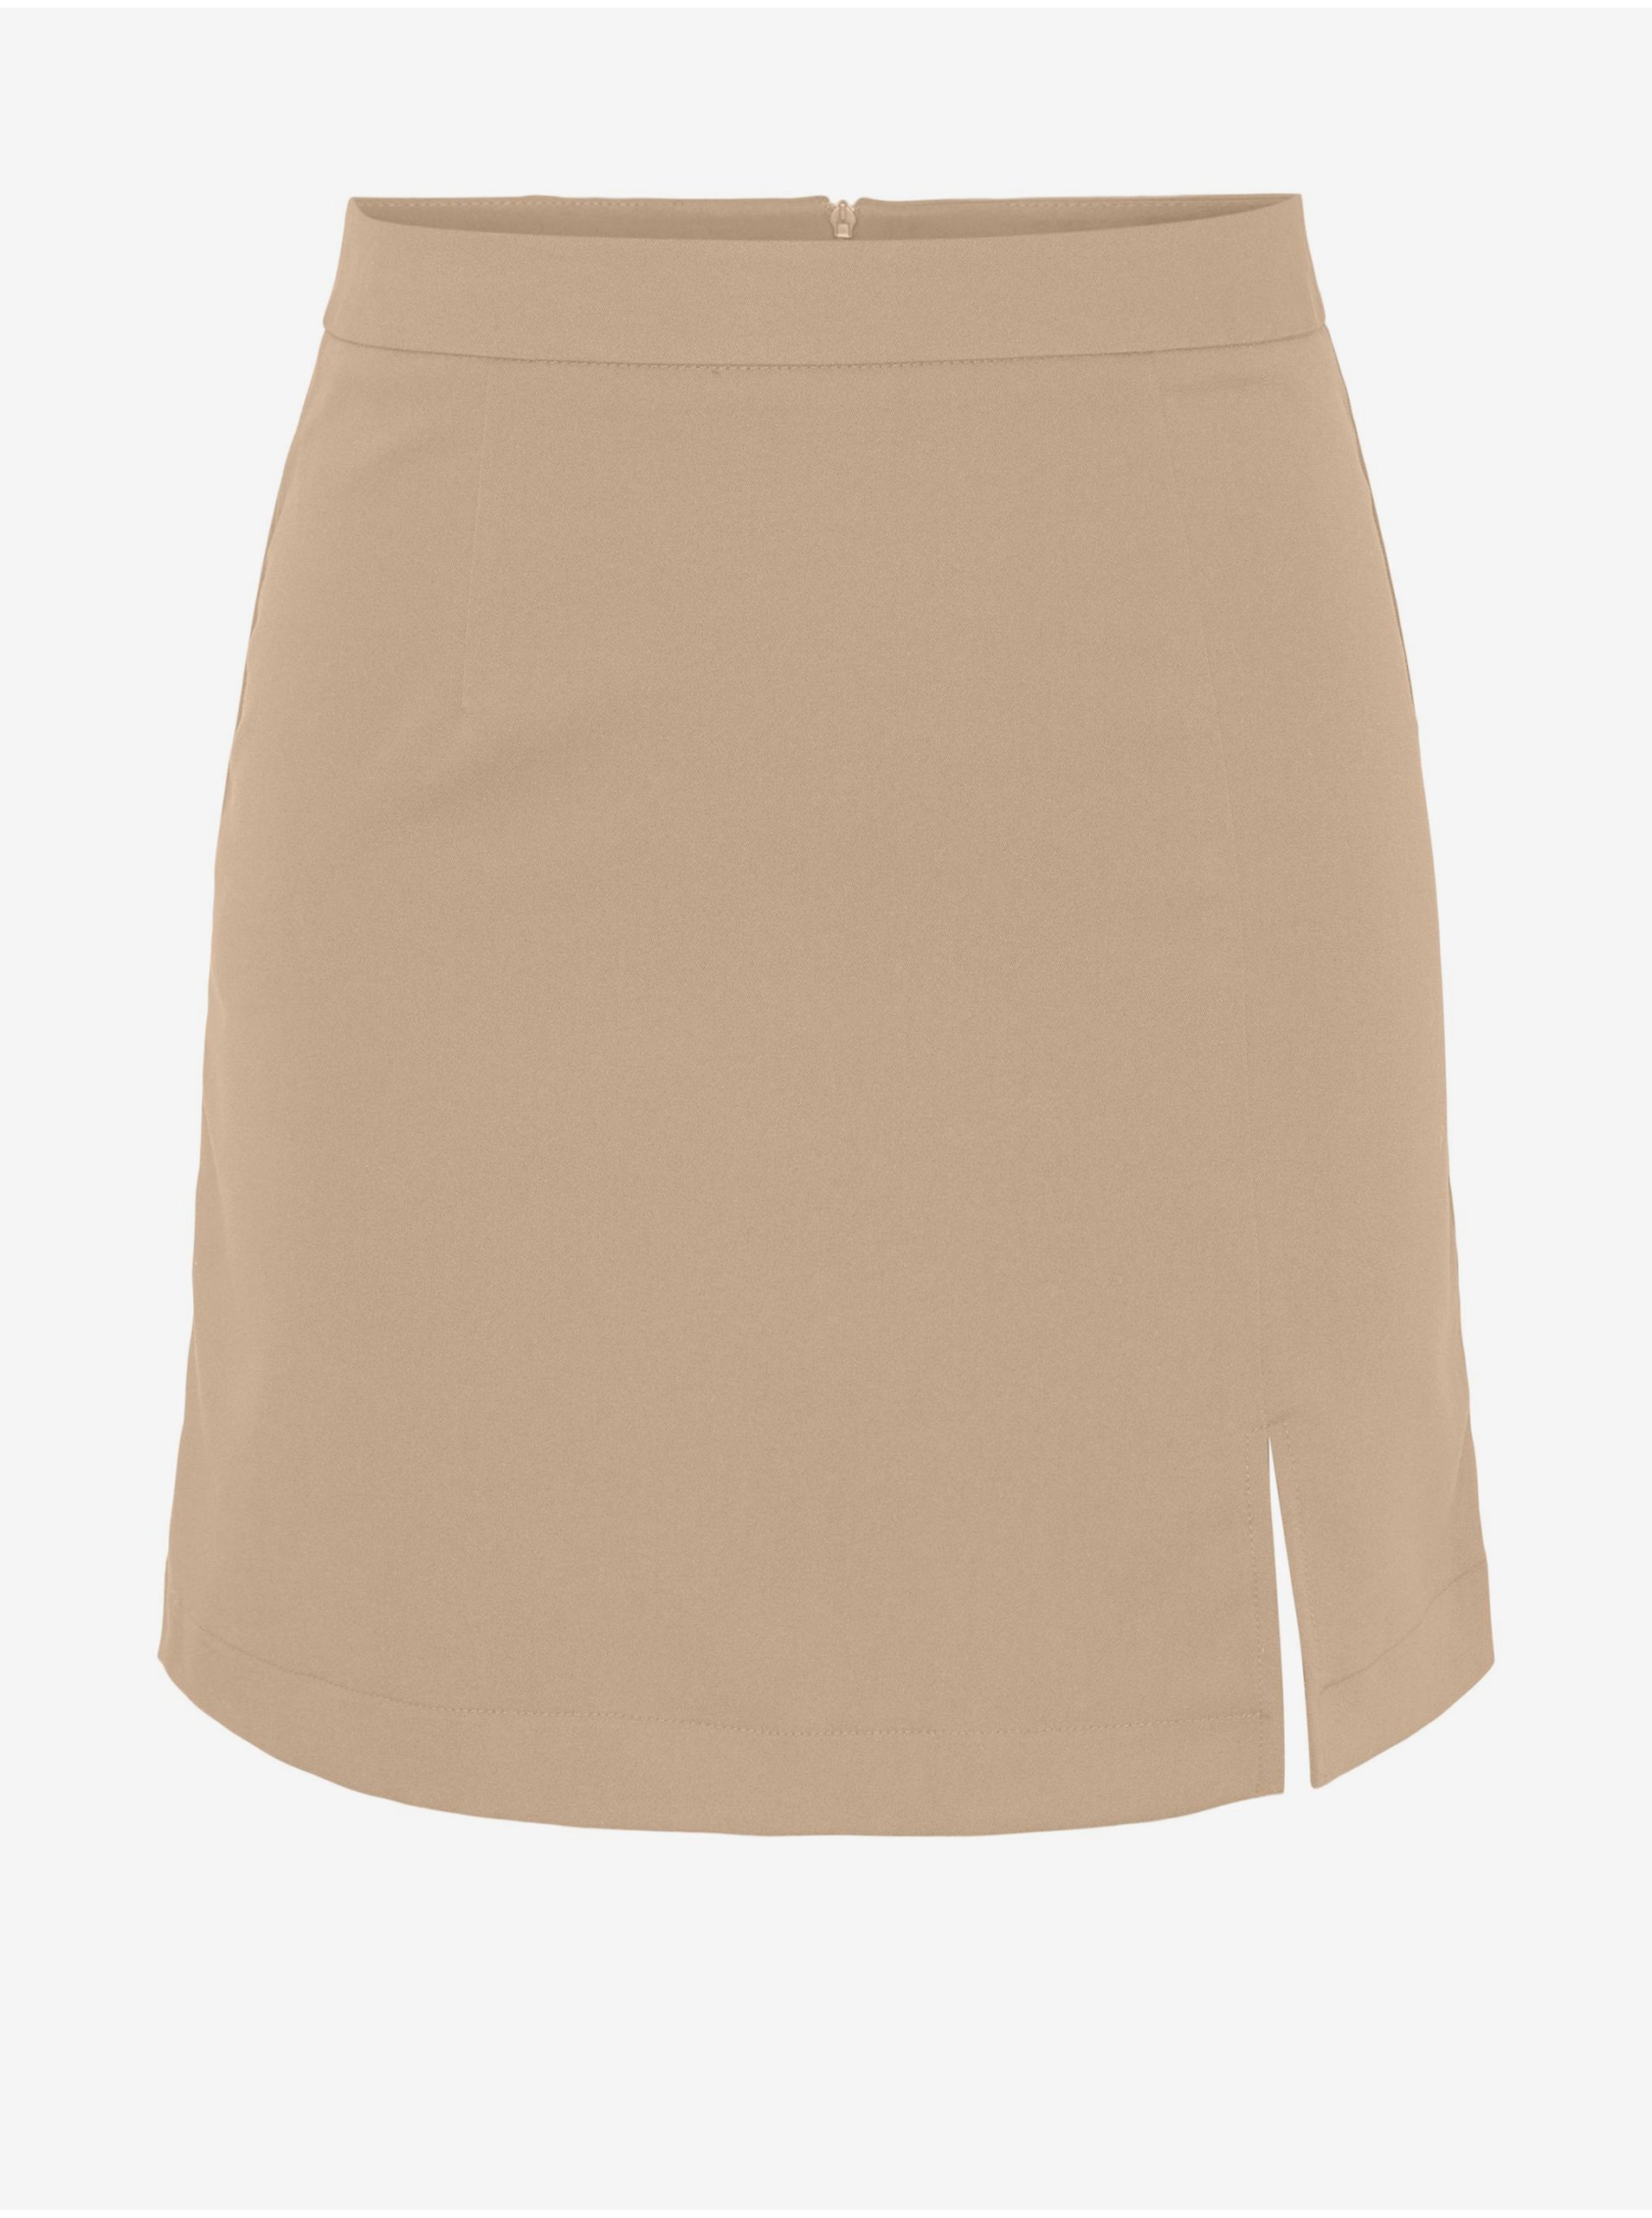 Beige Ladies Mini Skirt with Slit Pieces Thelma - Women